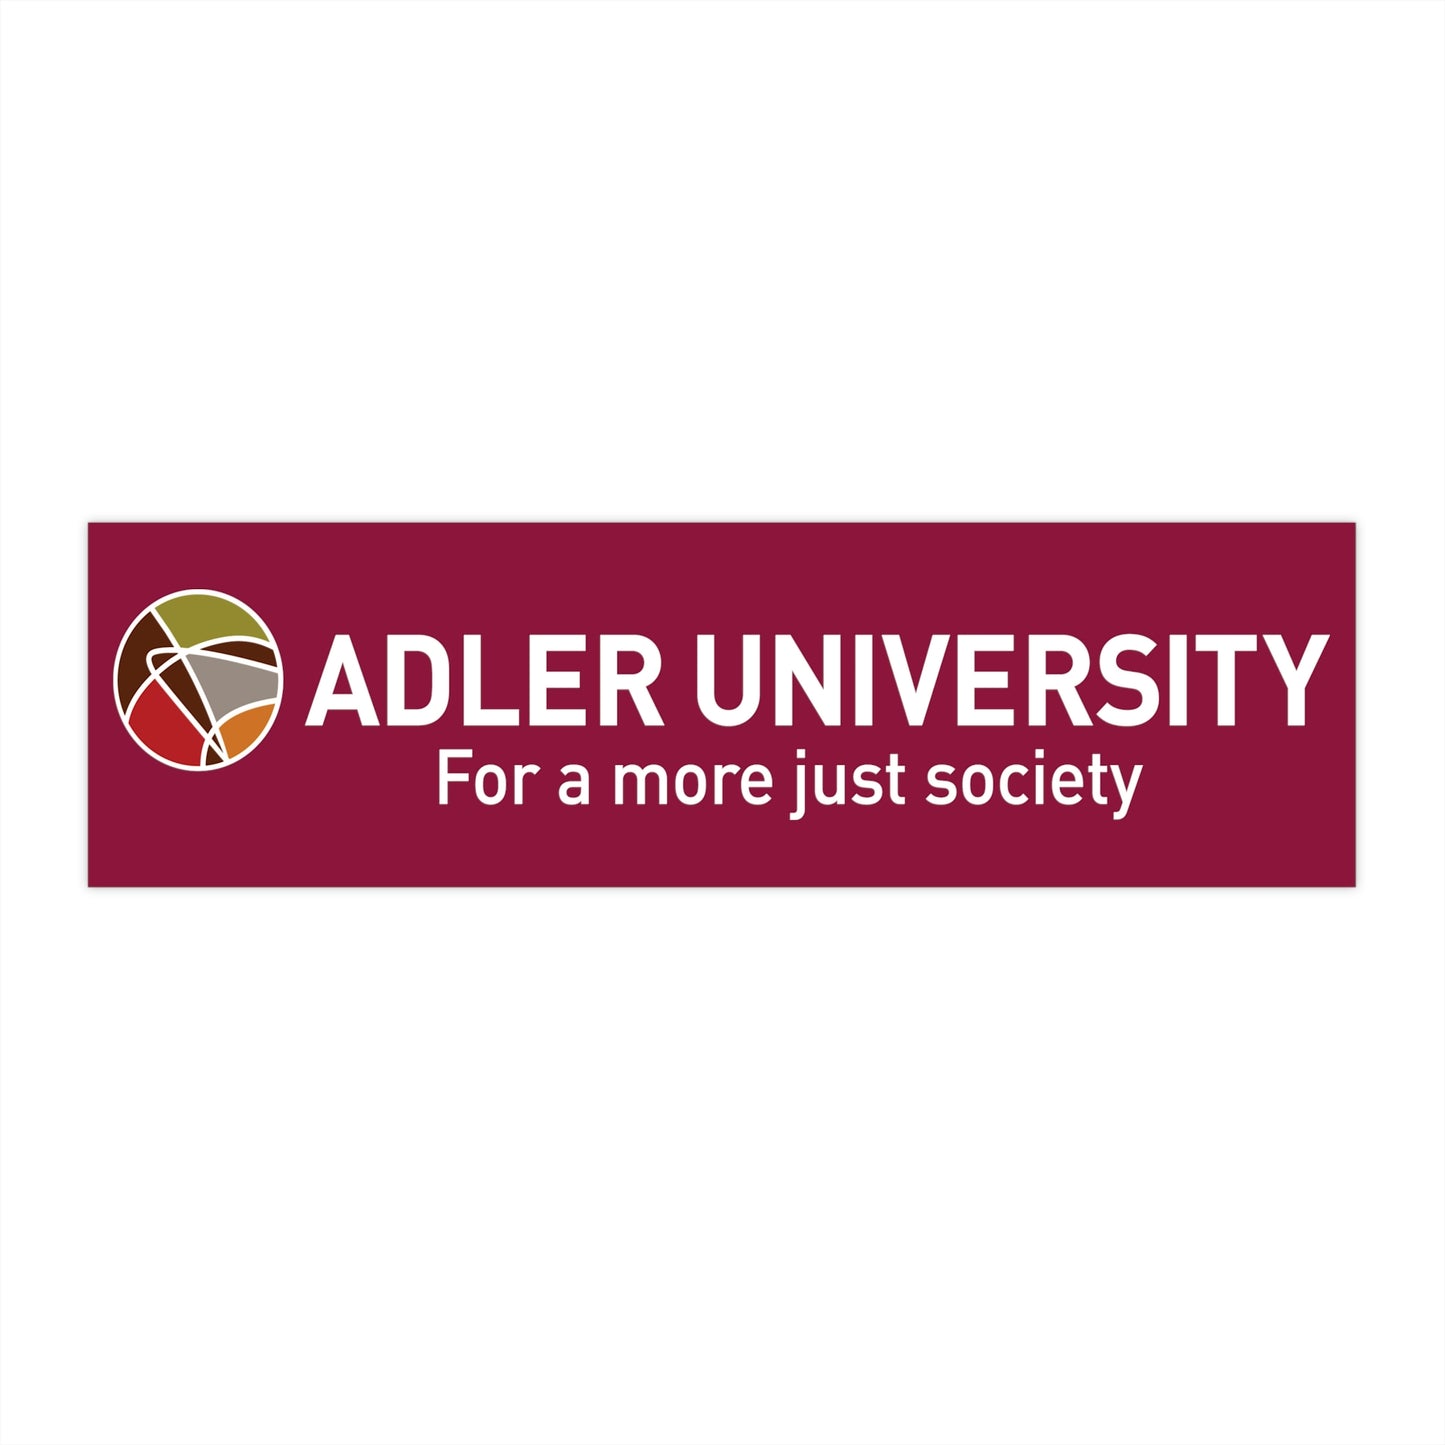 Adler University Bumper Stickers